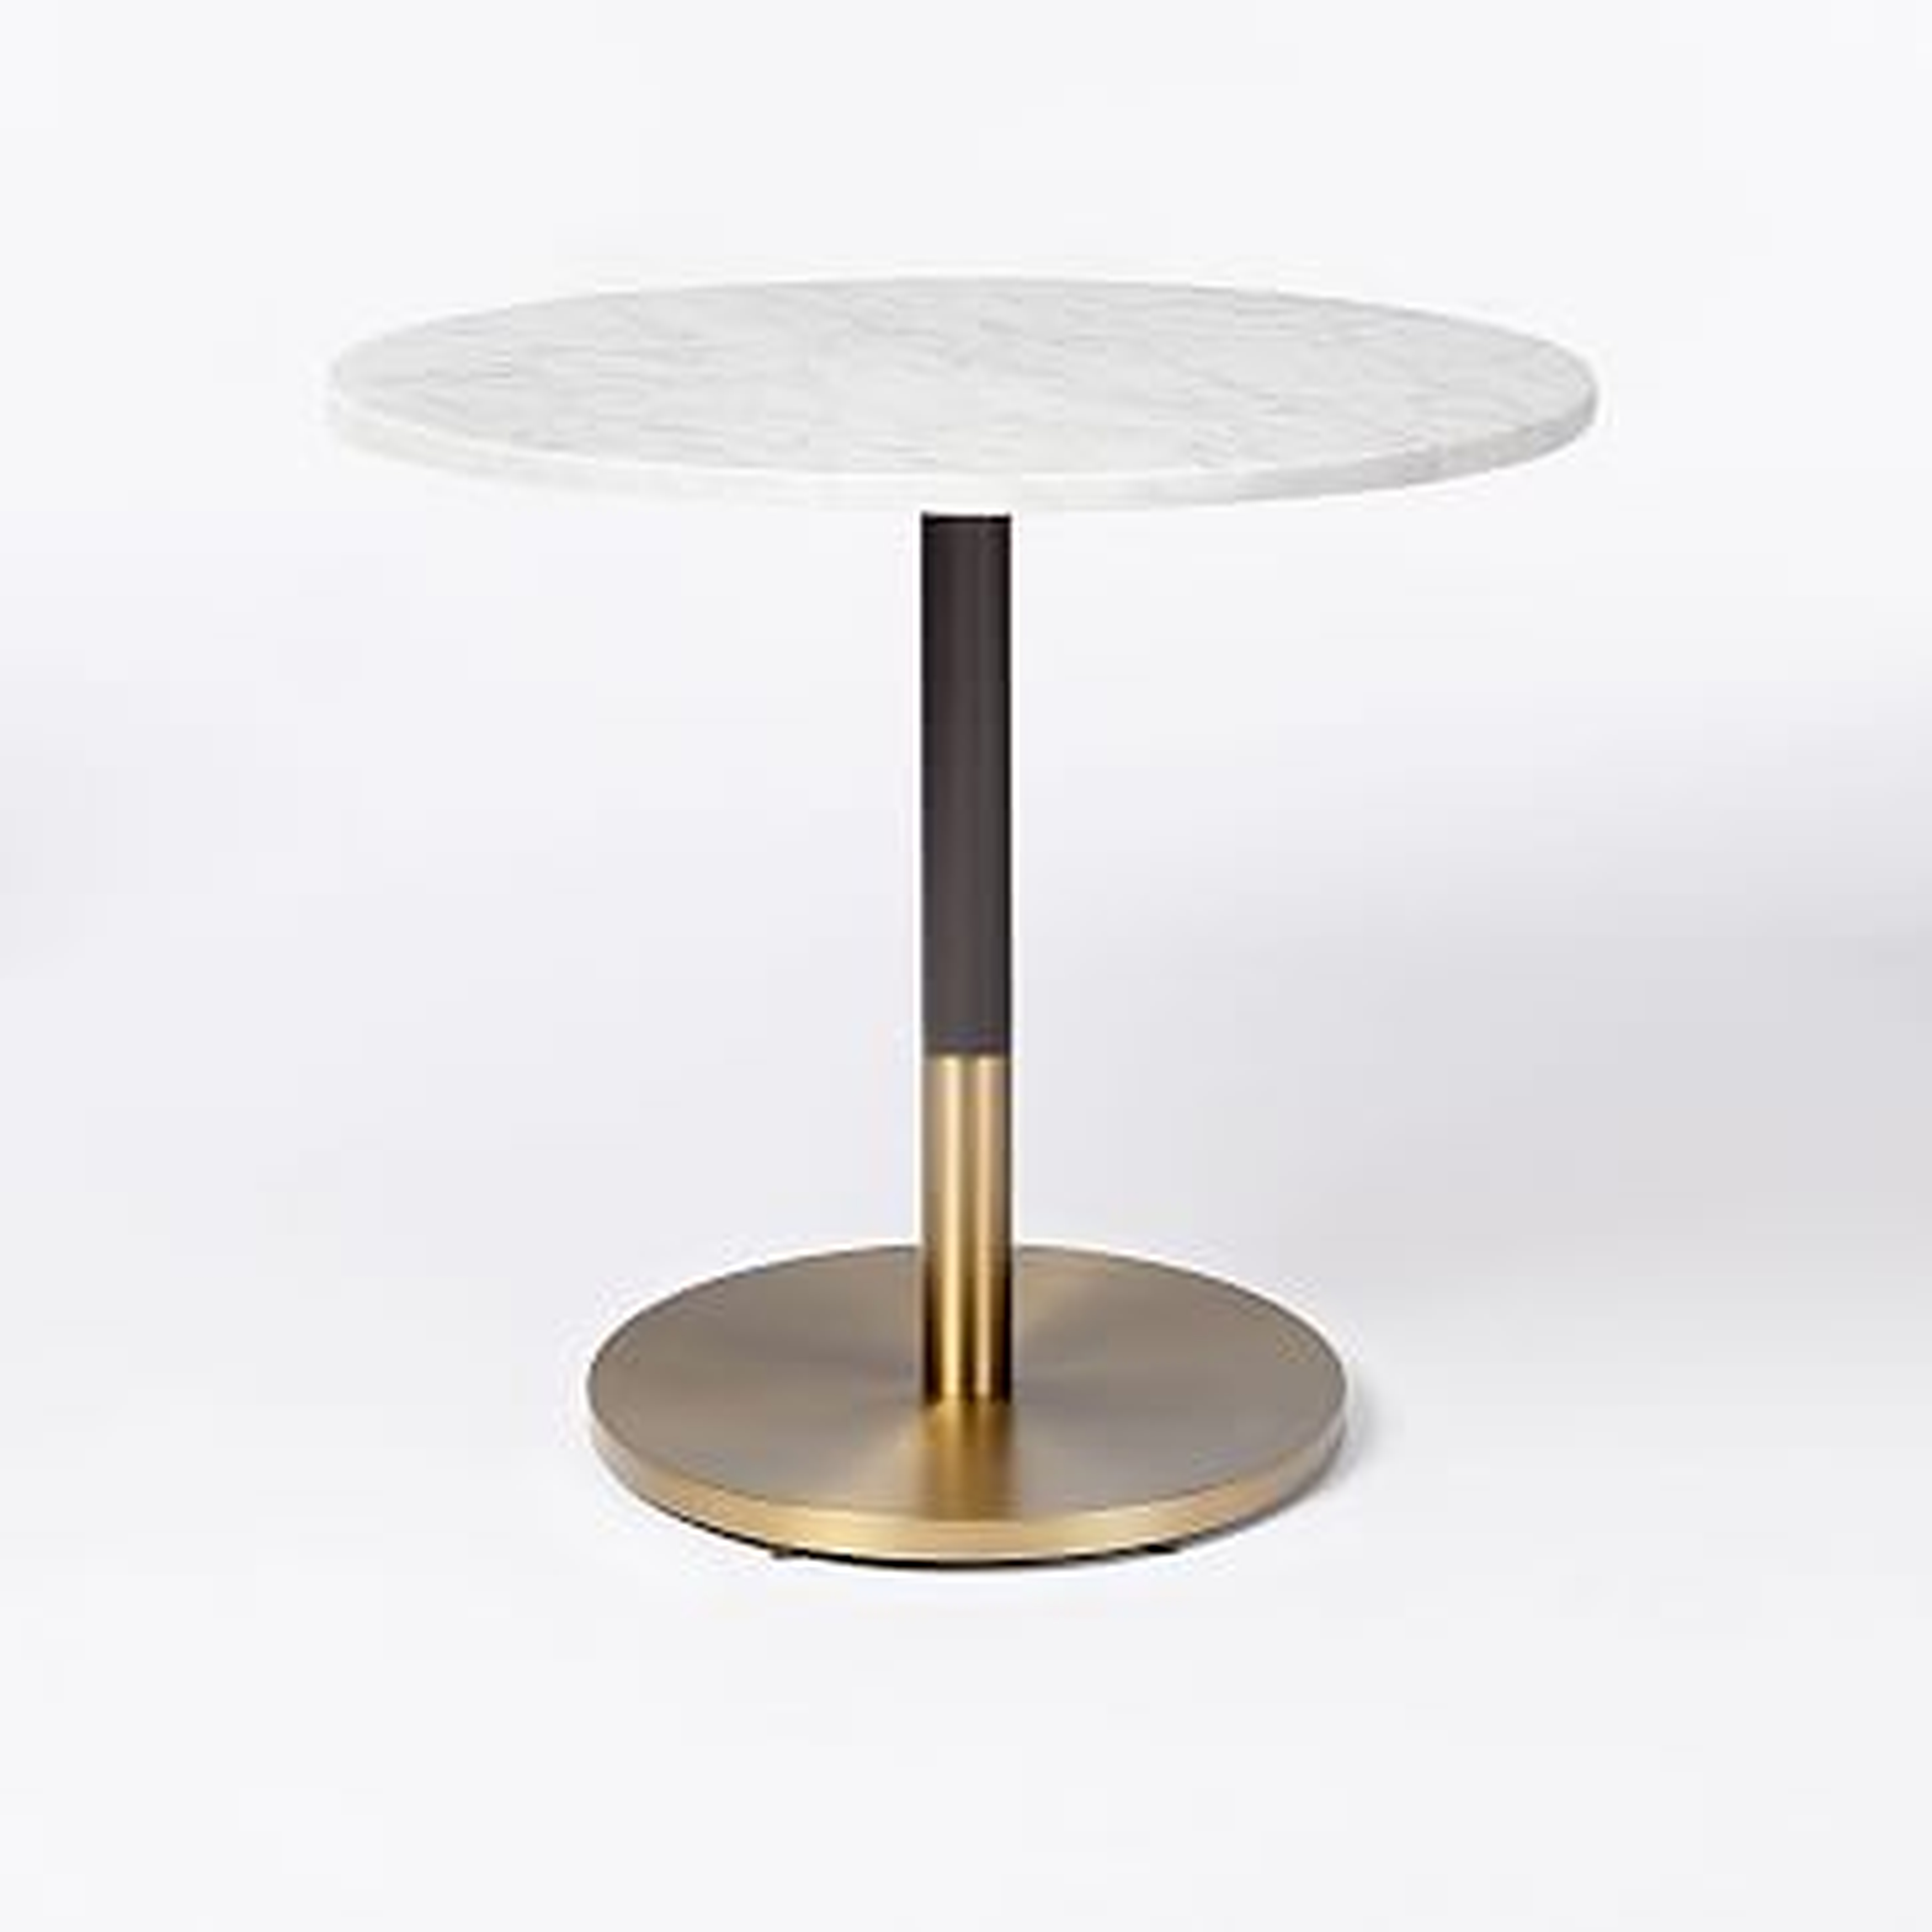 Orbit Base Round Dining Table, White Marble, Antique Bronze/Blackened Brass - West Elm